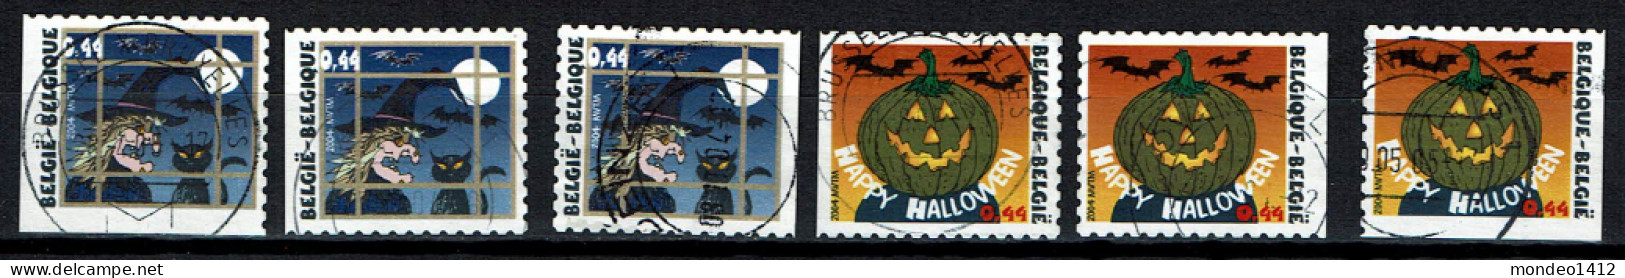 België OBP 3324/3325 - Halloween Pumpkin - Witch - Usati